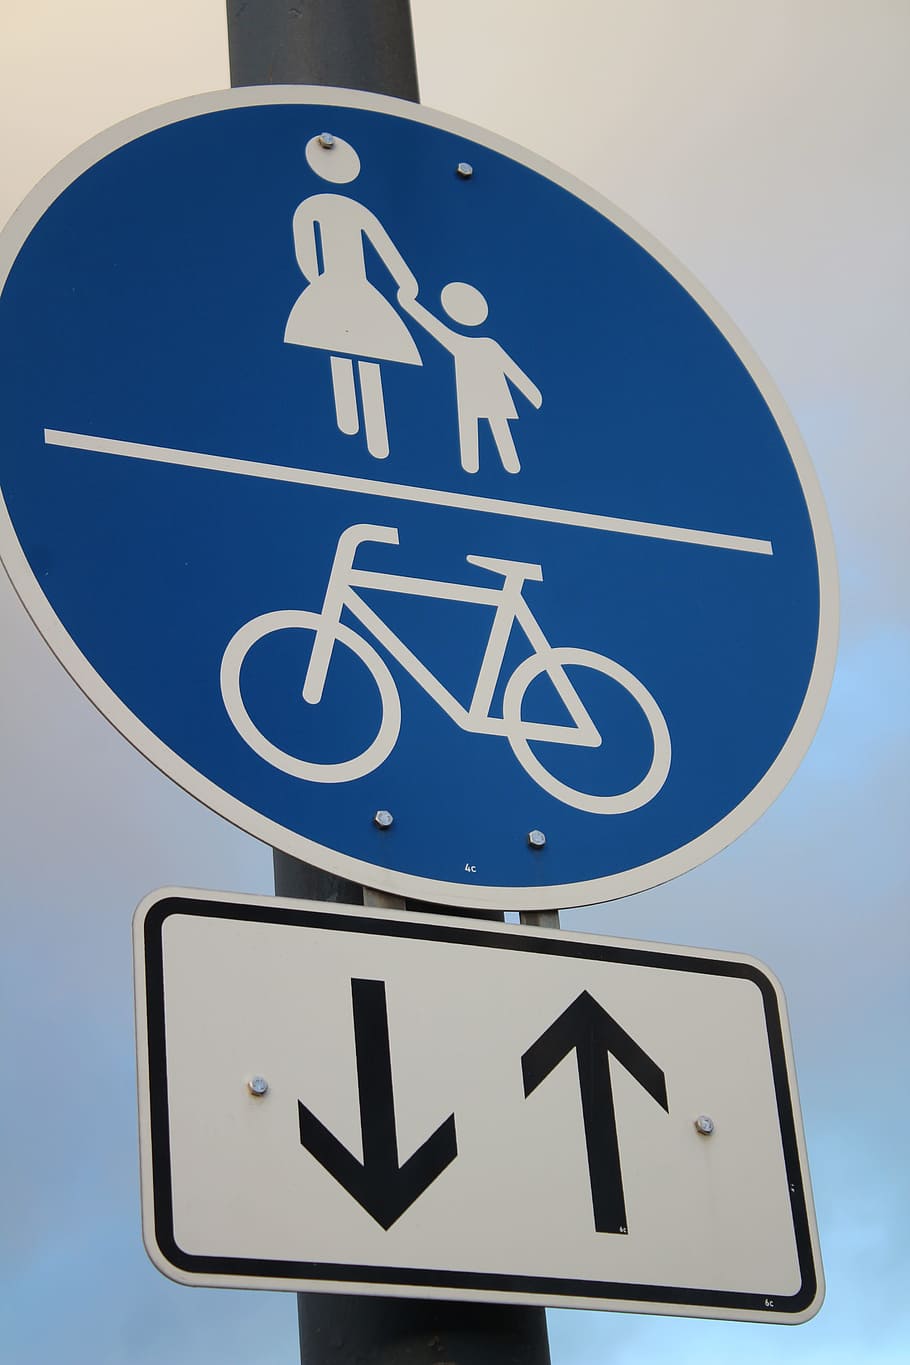 traffic sign, shield, blue, traffic, road sign, street sign, allowed, allows, bike, human